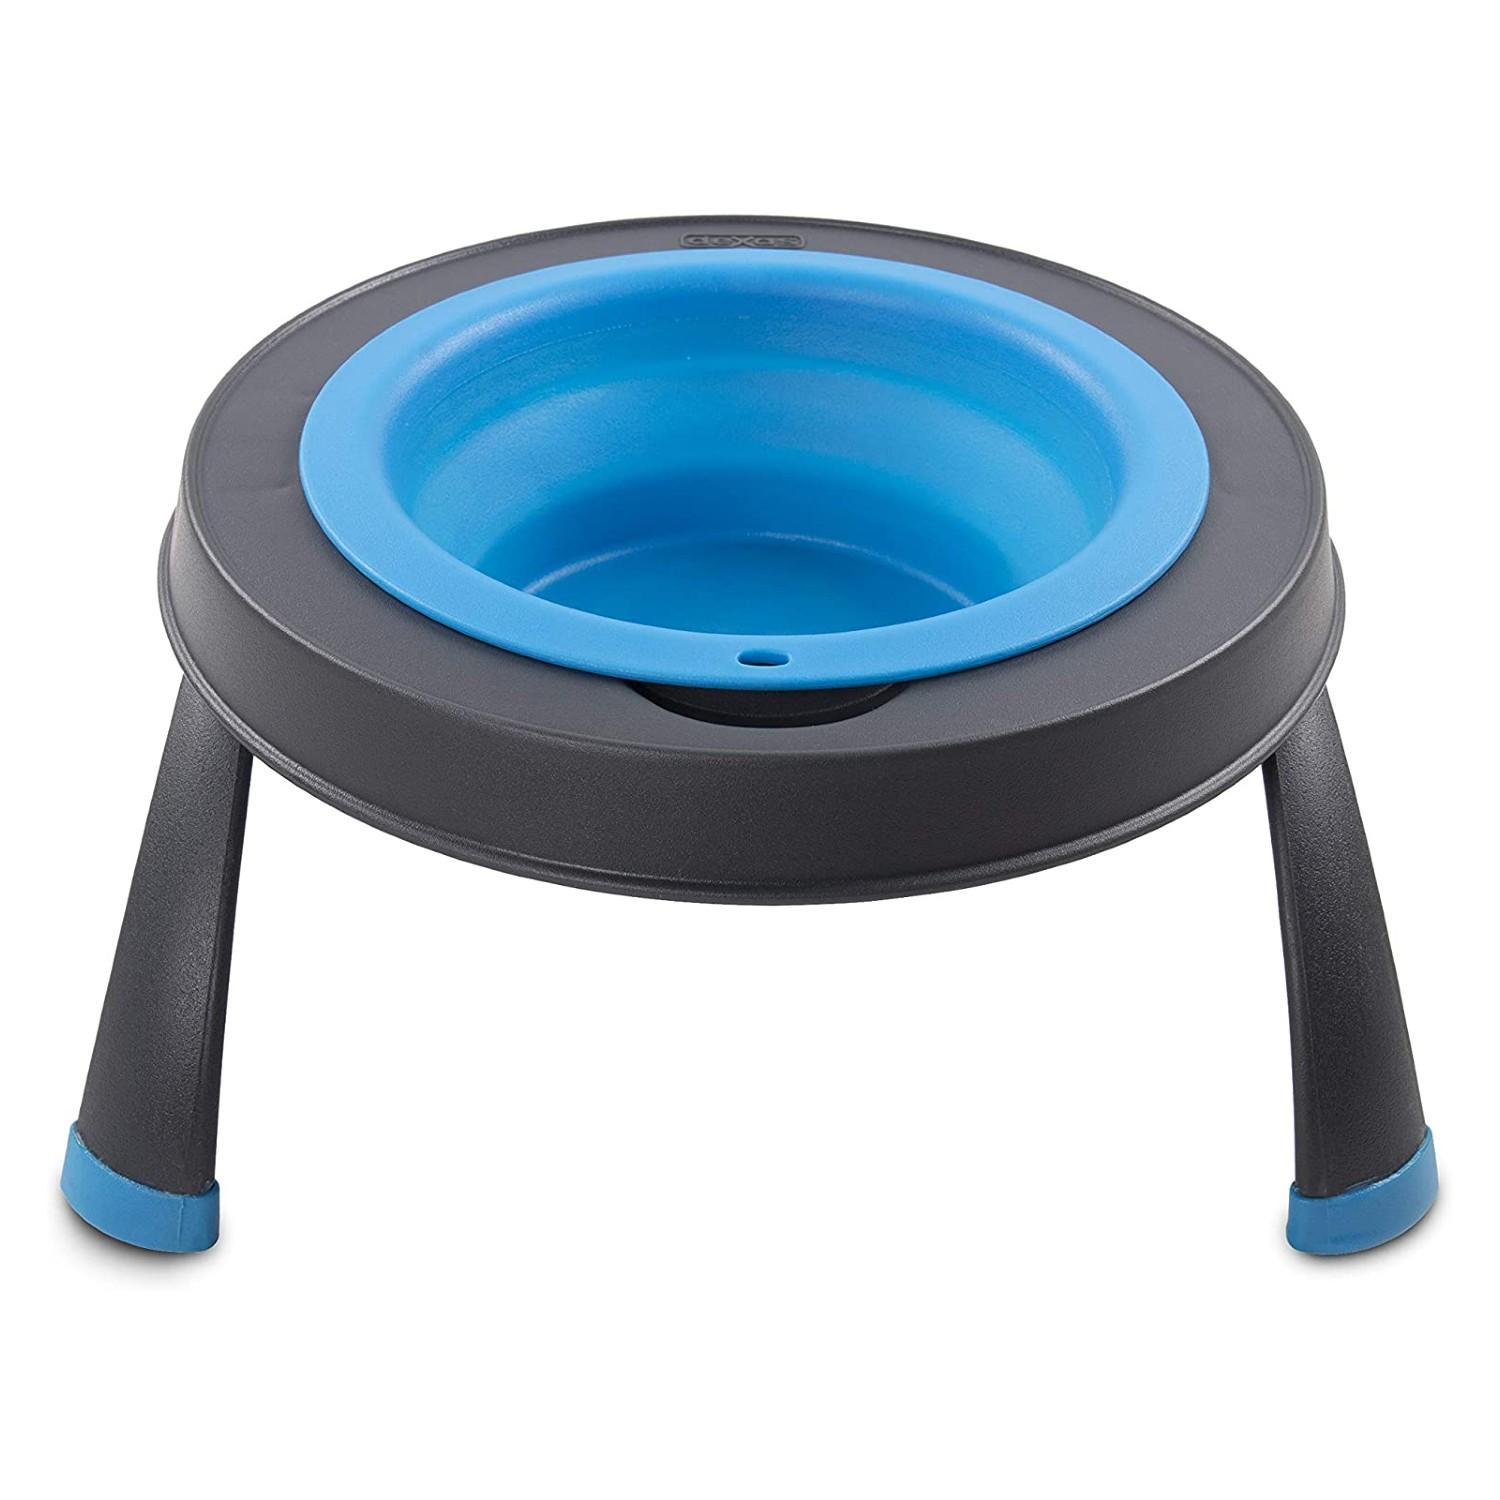 Dexas Single Elevated Dog Bowl by Popware - Pro Blue